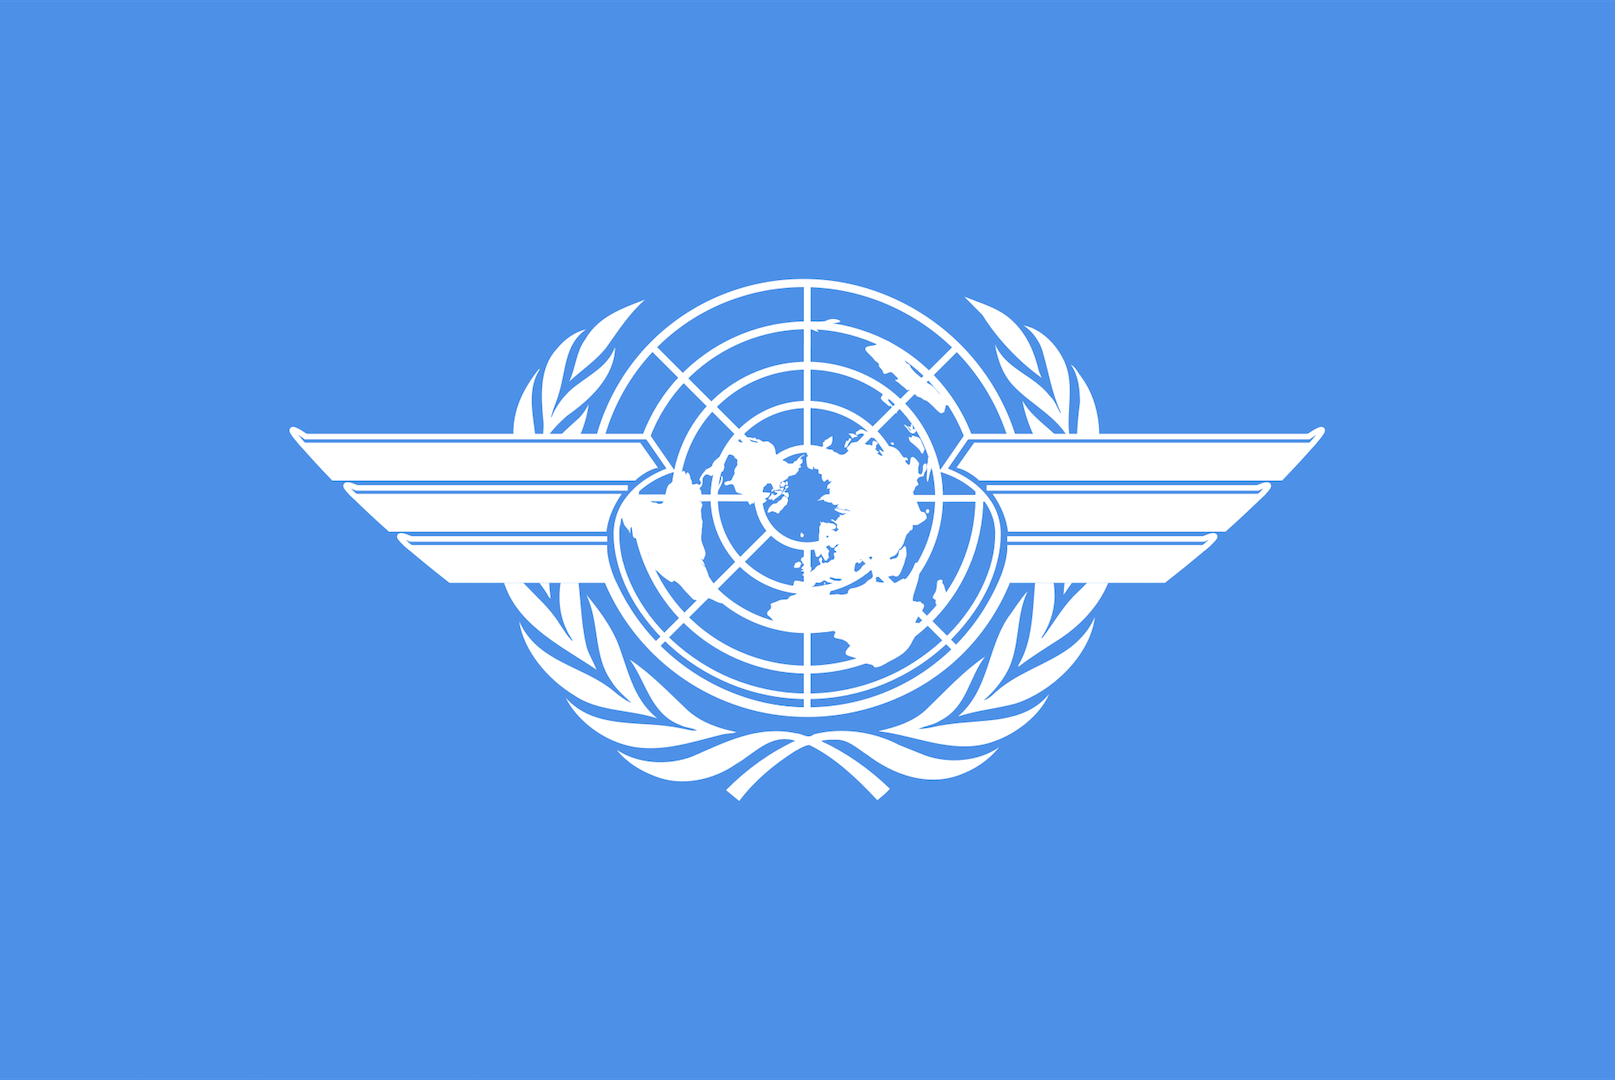 united nations flag png